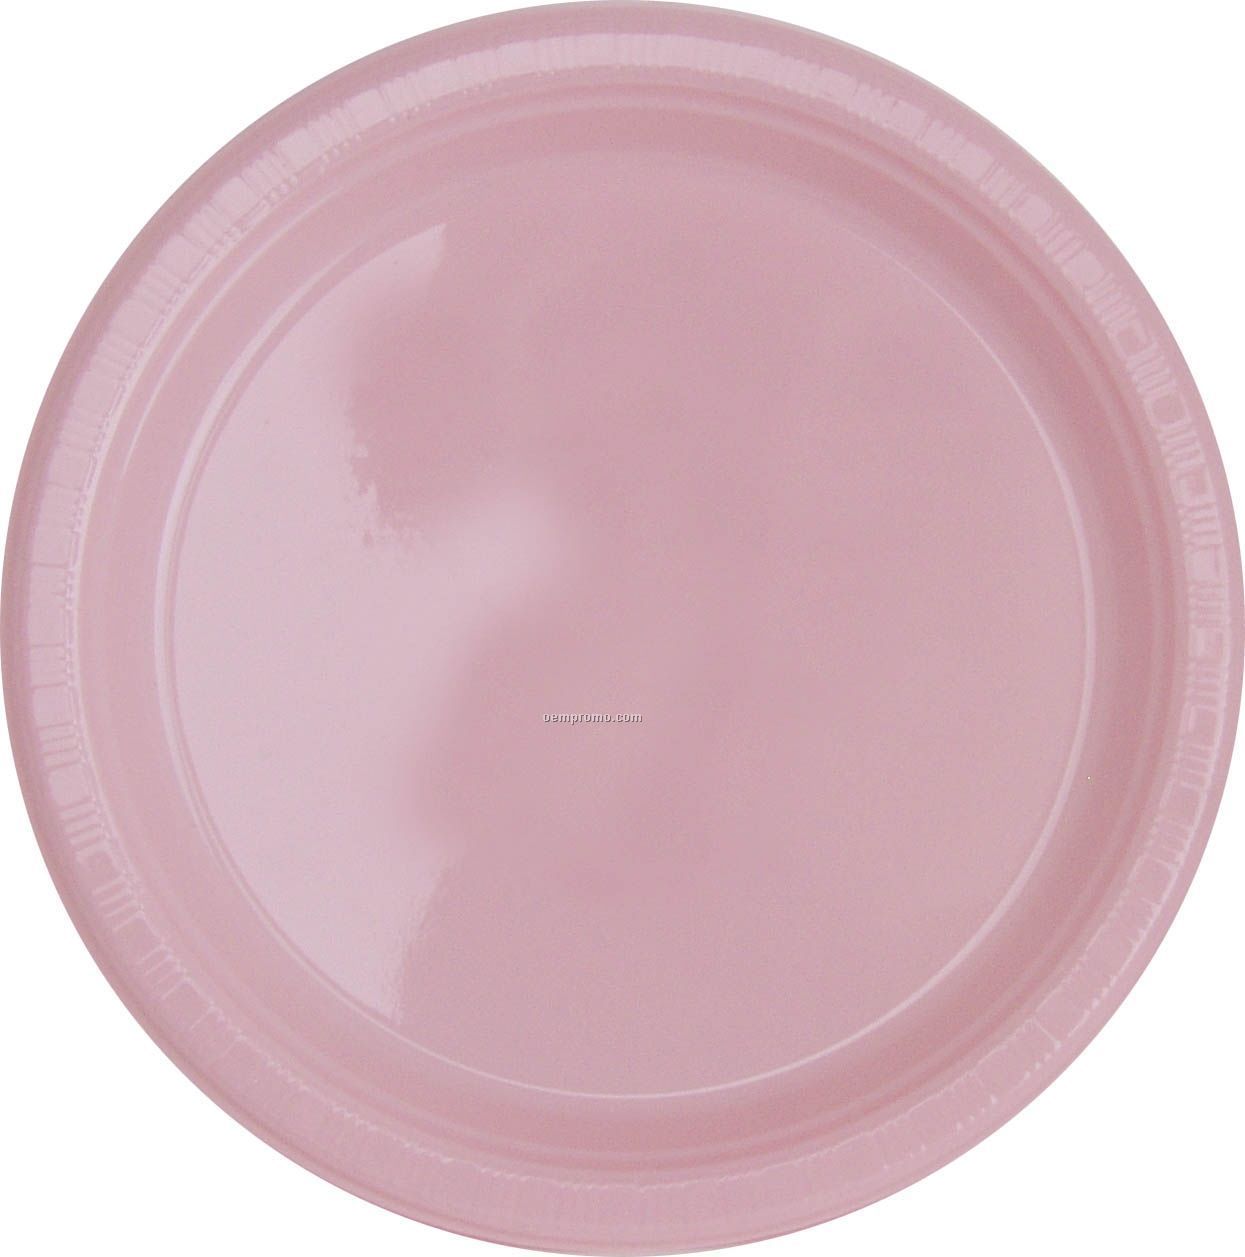 Colorware 7" Classic Pink Plastic Plate